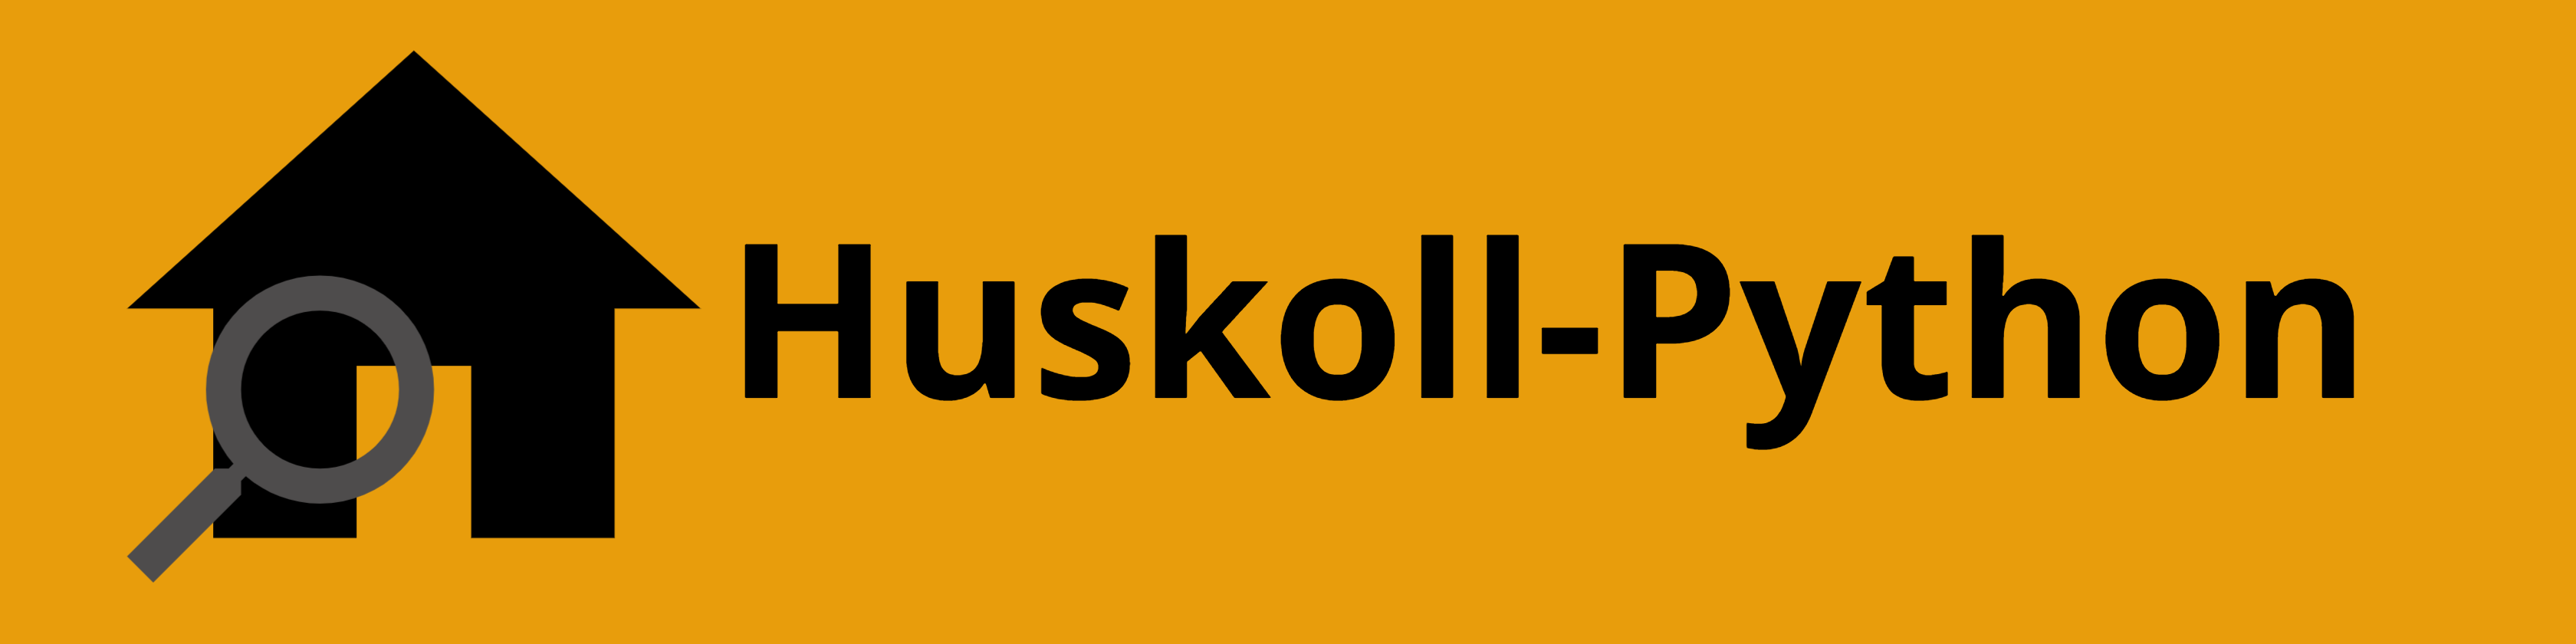 Huskoll-Python Library Logo Image